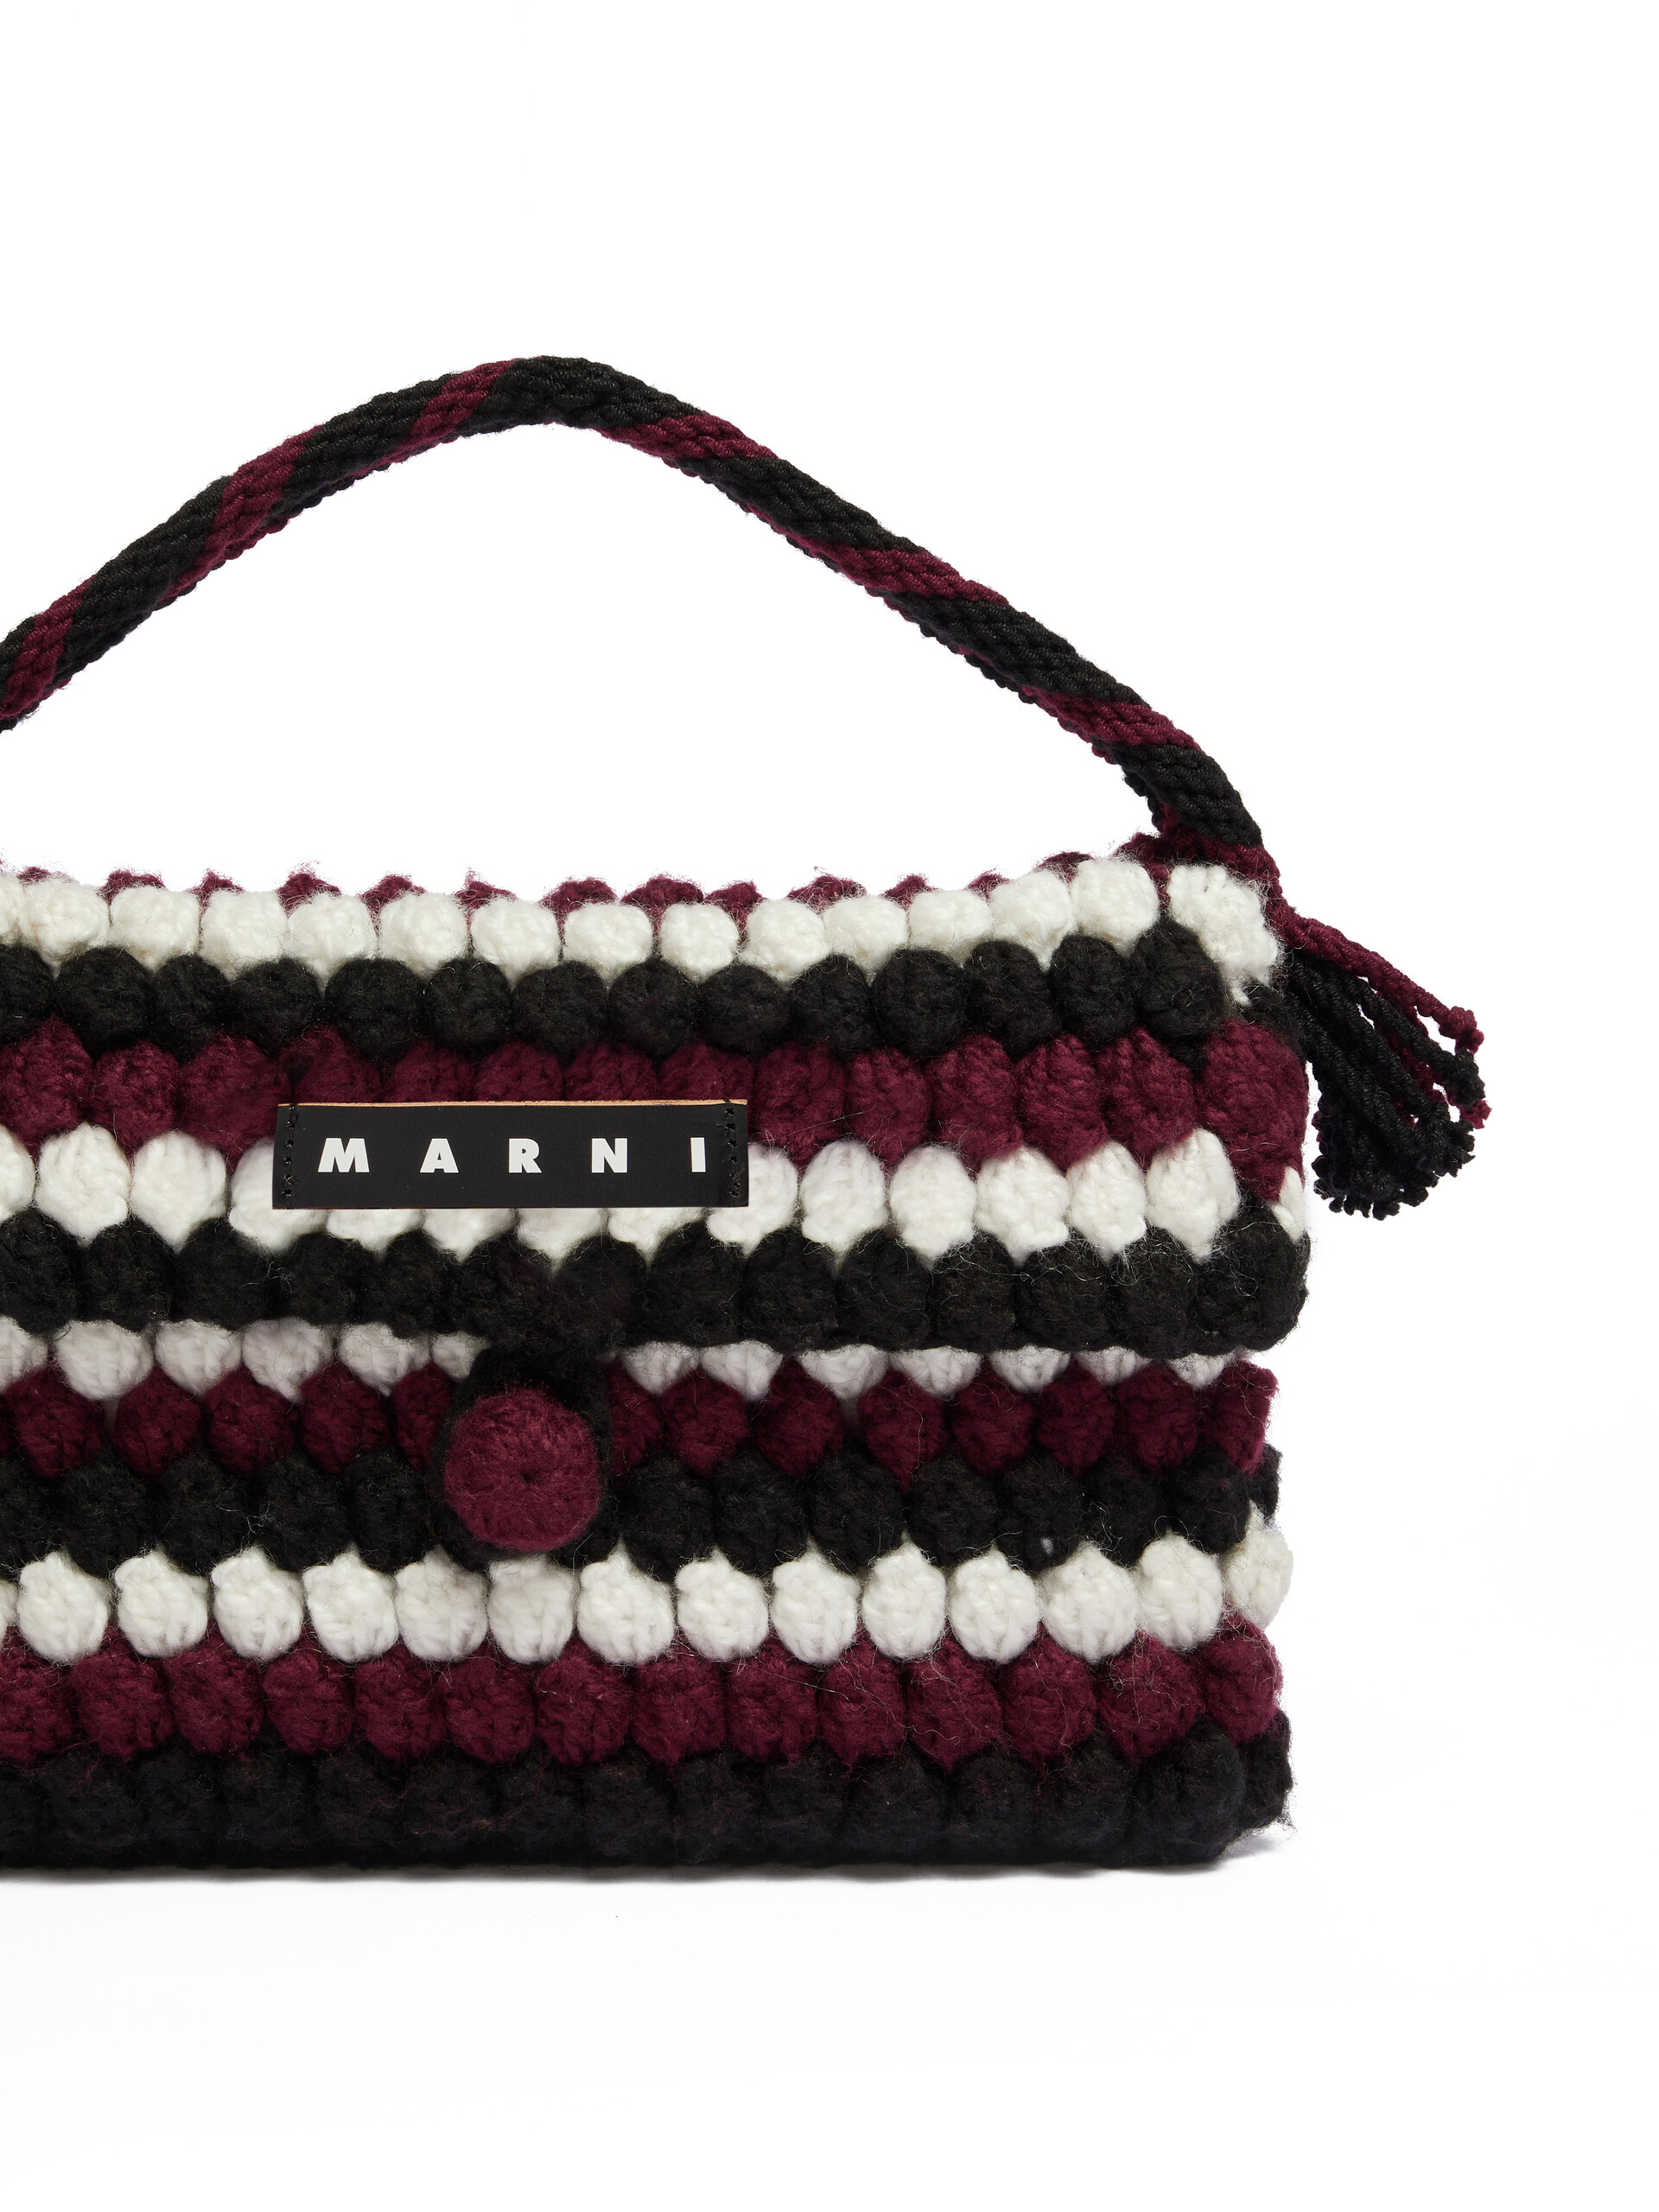 Blue Striped Crochet Marni Market Bread Handbag - Shopping Bags - Image 4